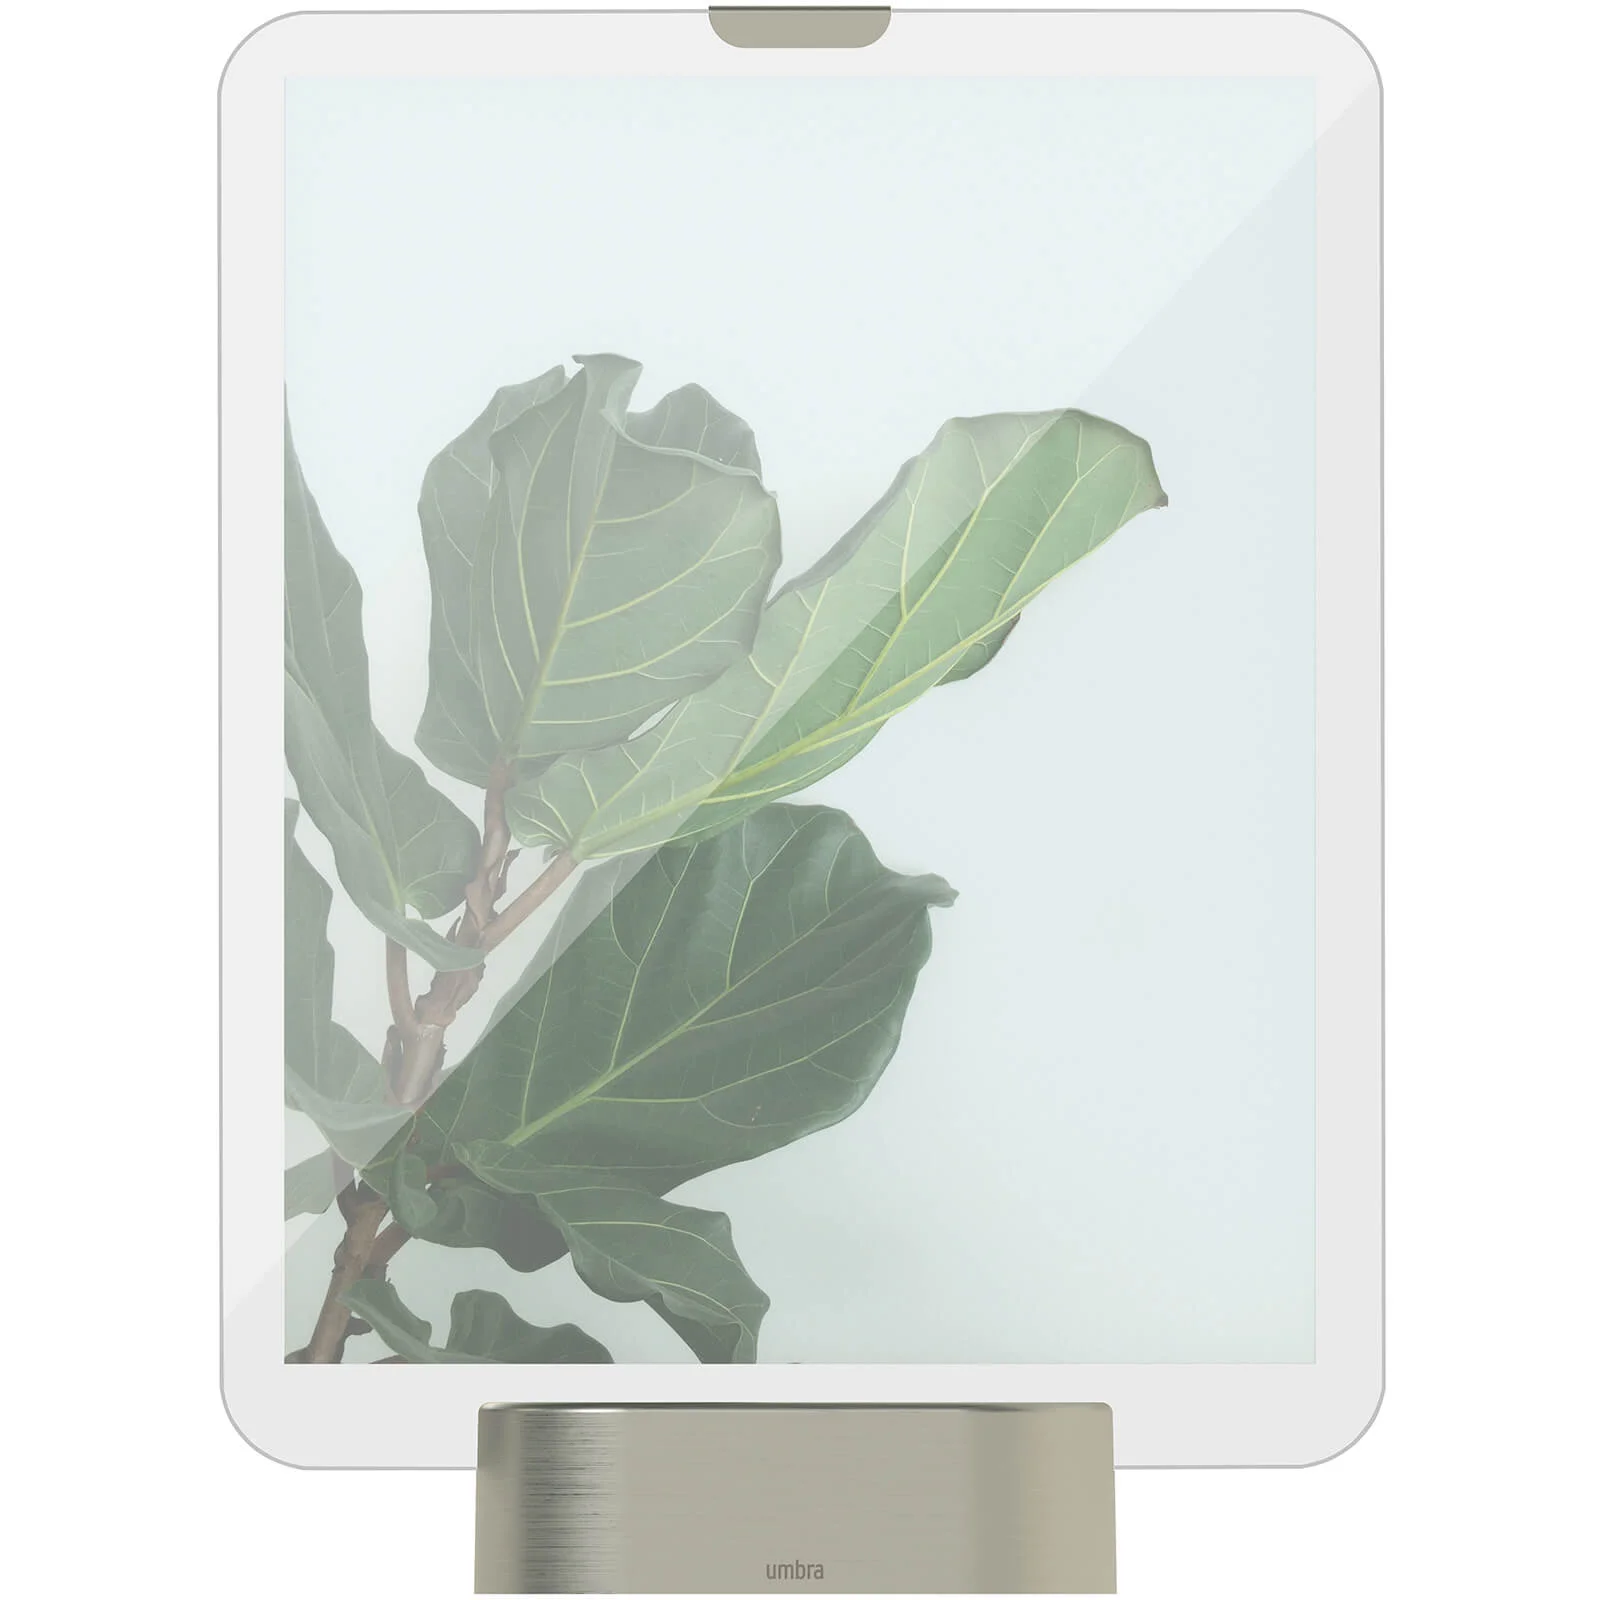 Umbra Glo LED Photo Display - Nickel (30cm x 30.5cm) Image 1